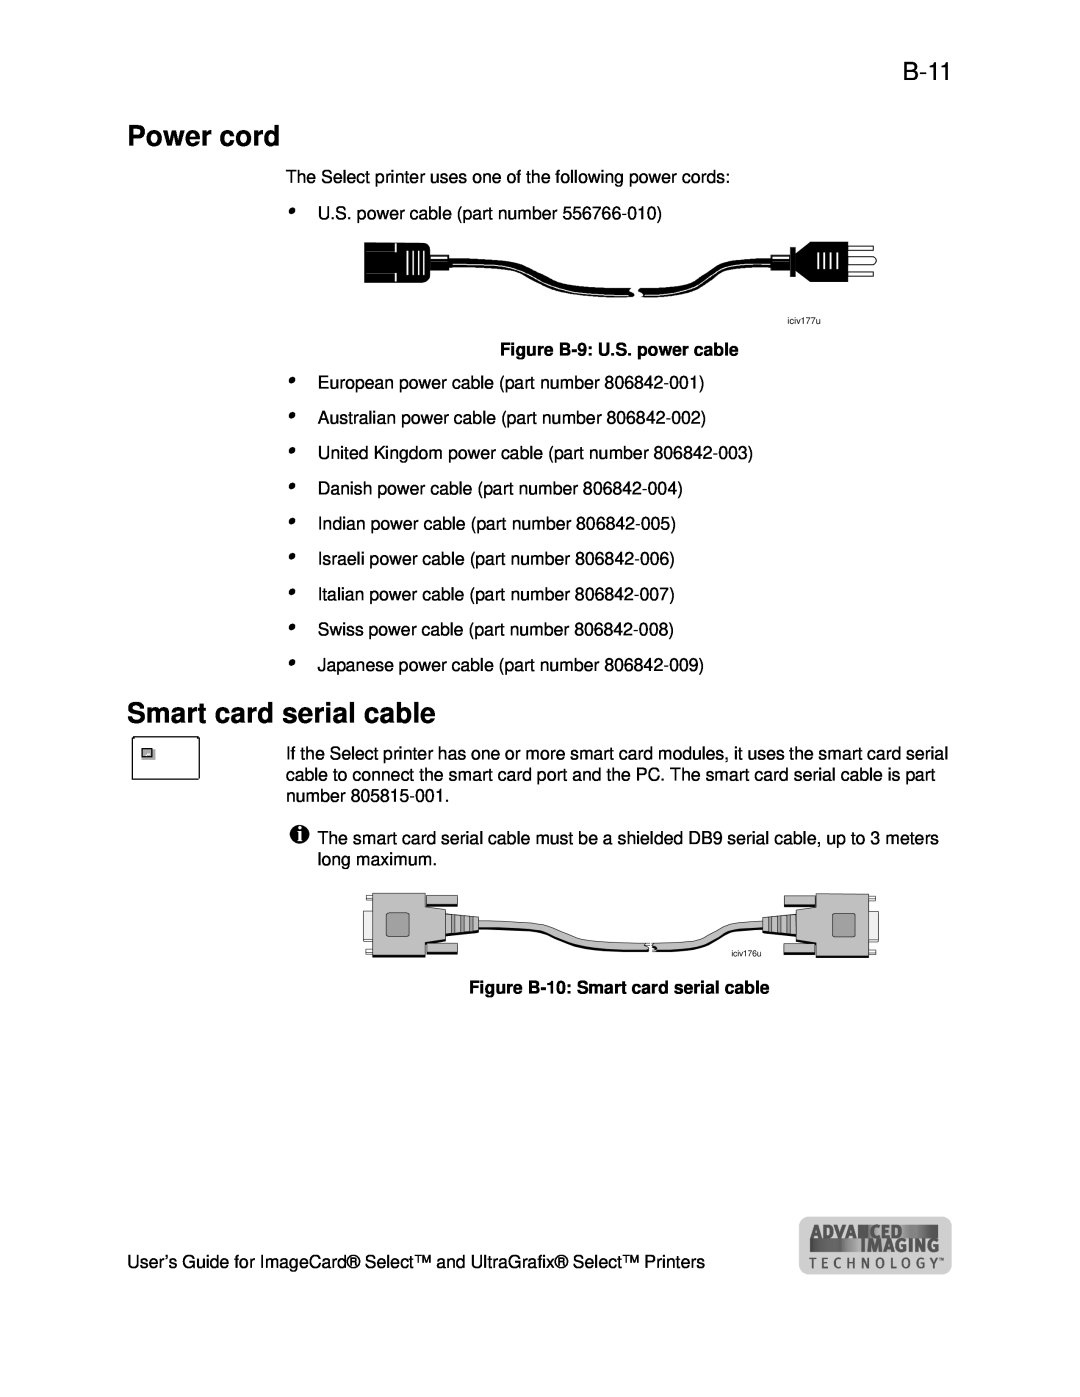 Datacard Group ImageCard SelectTM and UltraGrafix SelectTM Printers manual Power cord, Smart card serial cable, B-11 